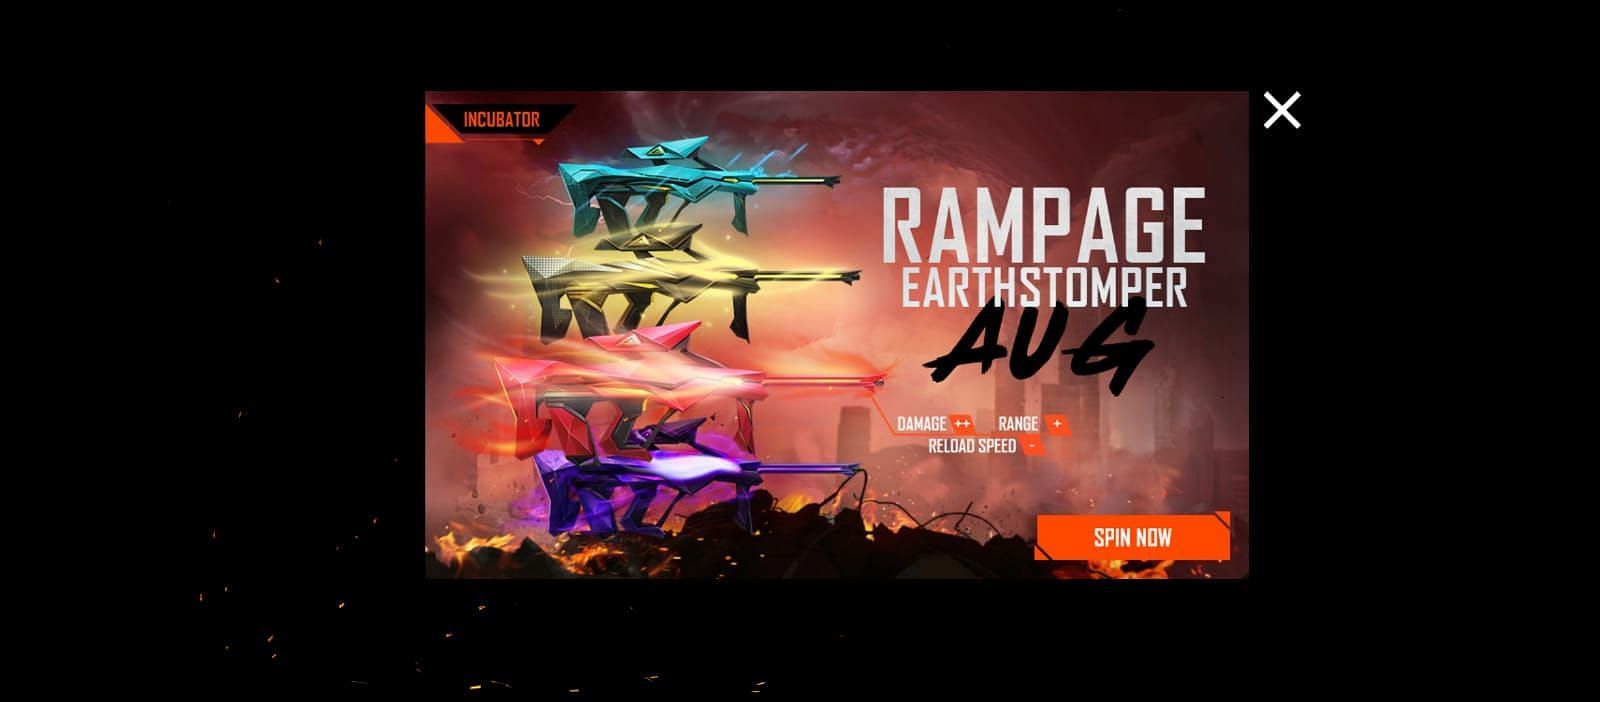 Rampage Earthstomper AUG در بازی بتل رویال (تصویر از طریق Garena)